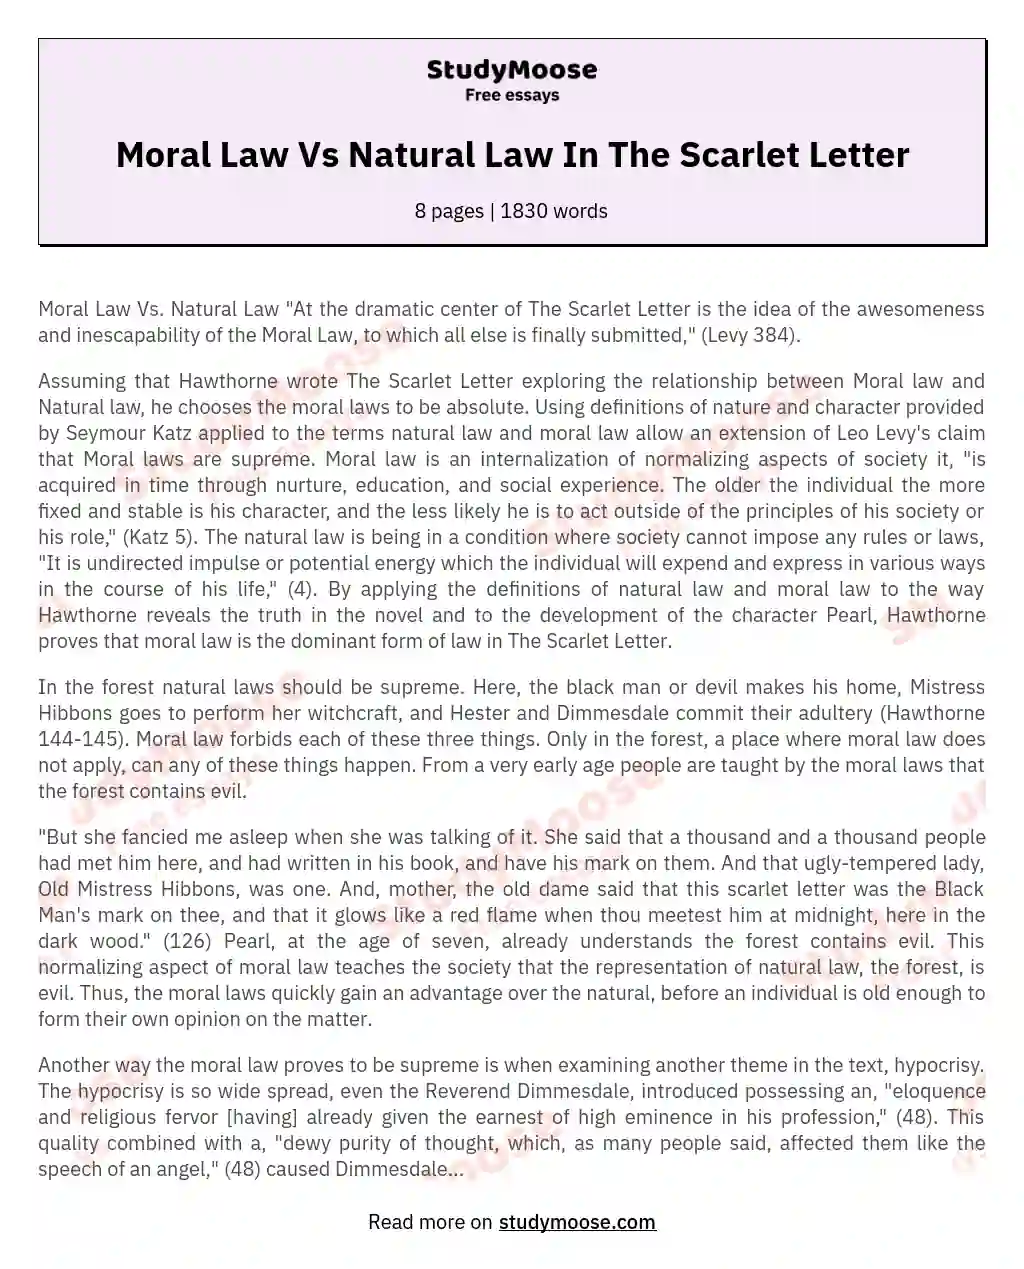 Moral Law Vs Natural Law In The Scarlet Letter essay